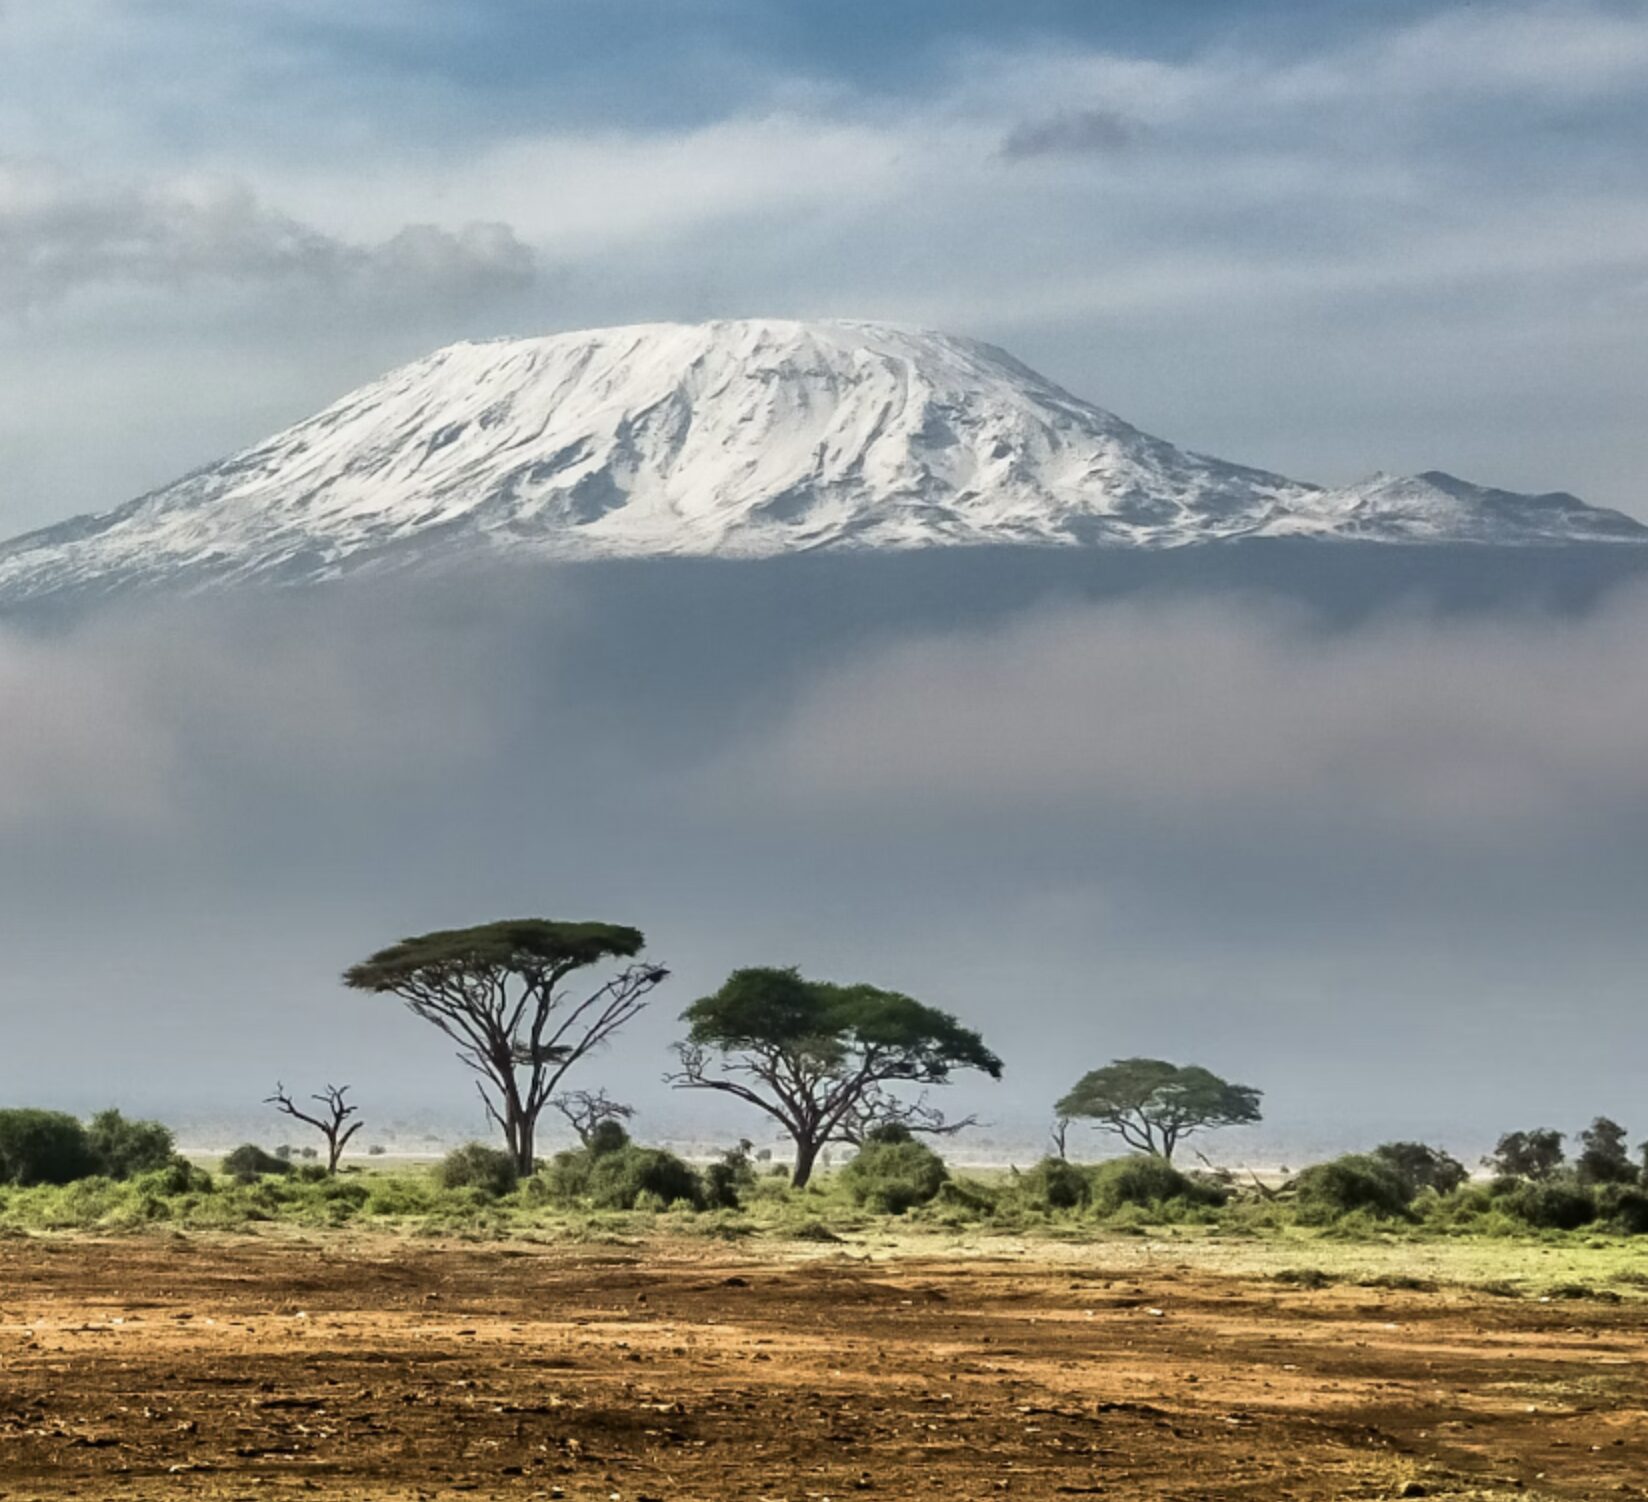 View of Kilimanjaro (snowy peak) from Amboseli National Park, Kenya.